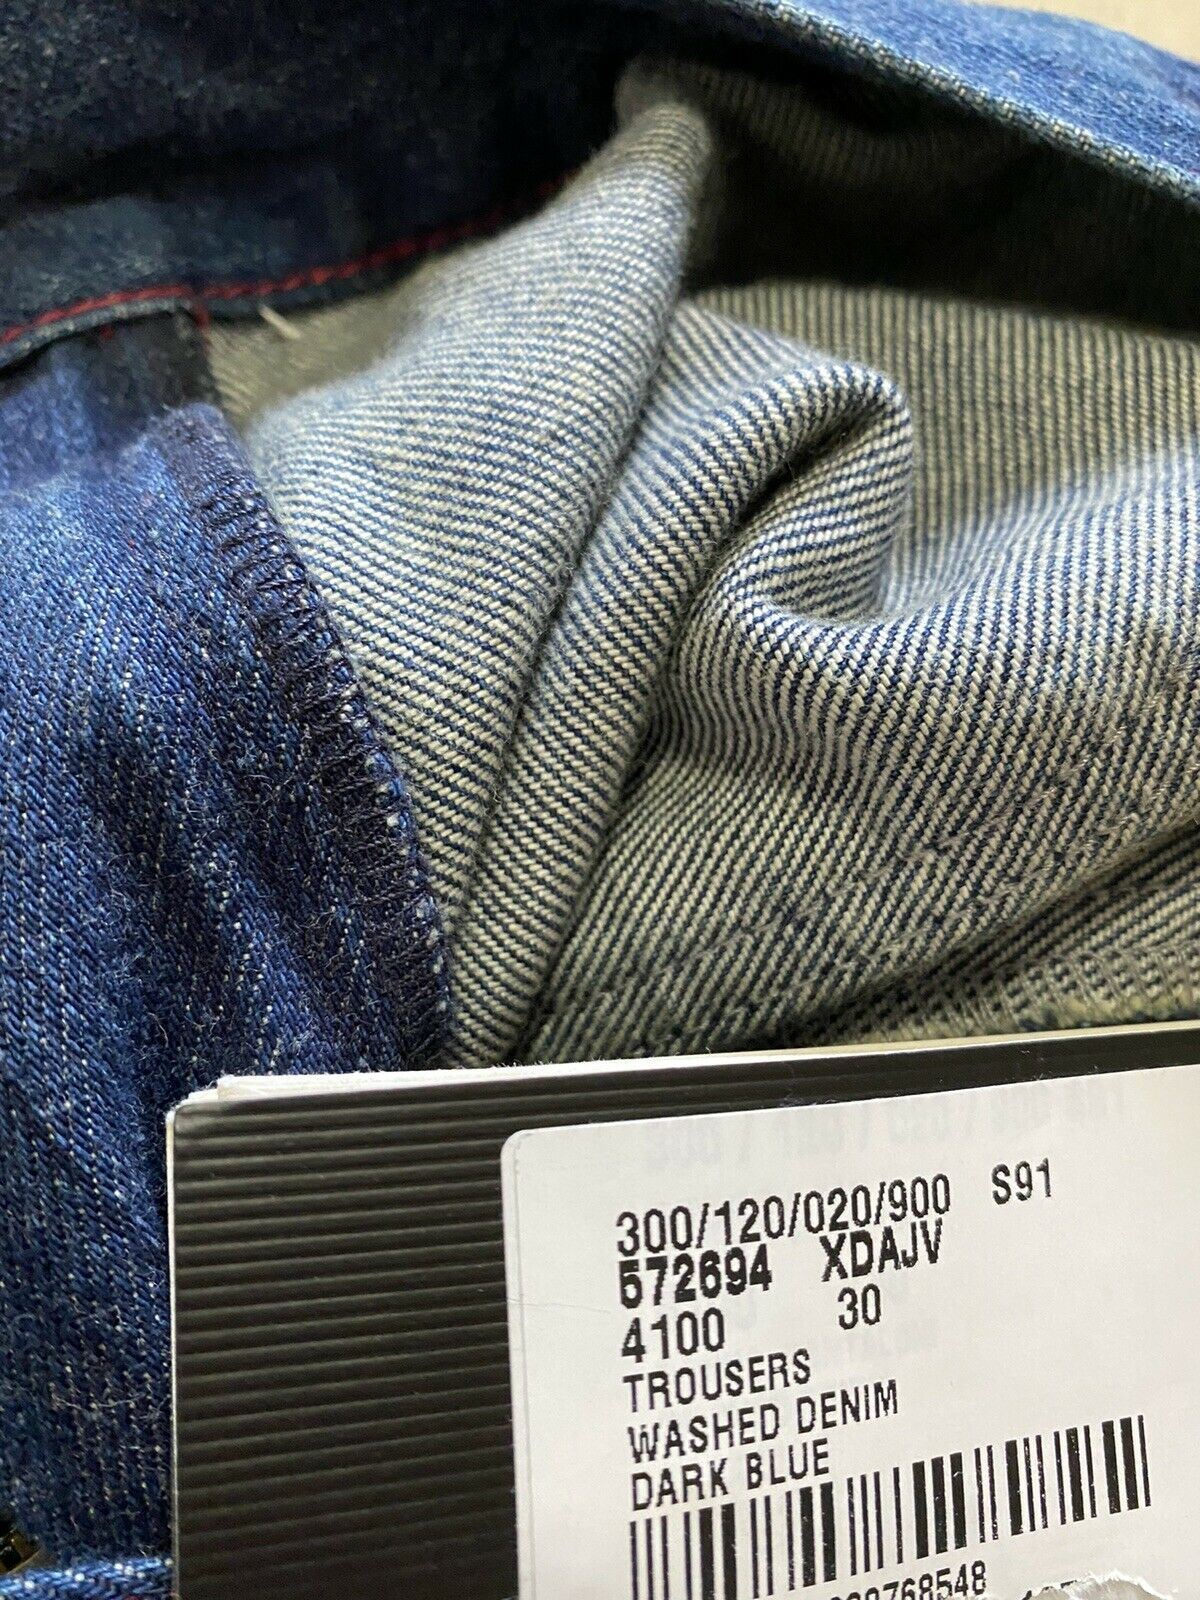 New $880 Gucci Women's Washed Denim Jeans Pants Skirt DK Blue 30